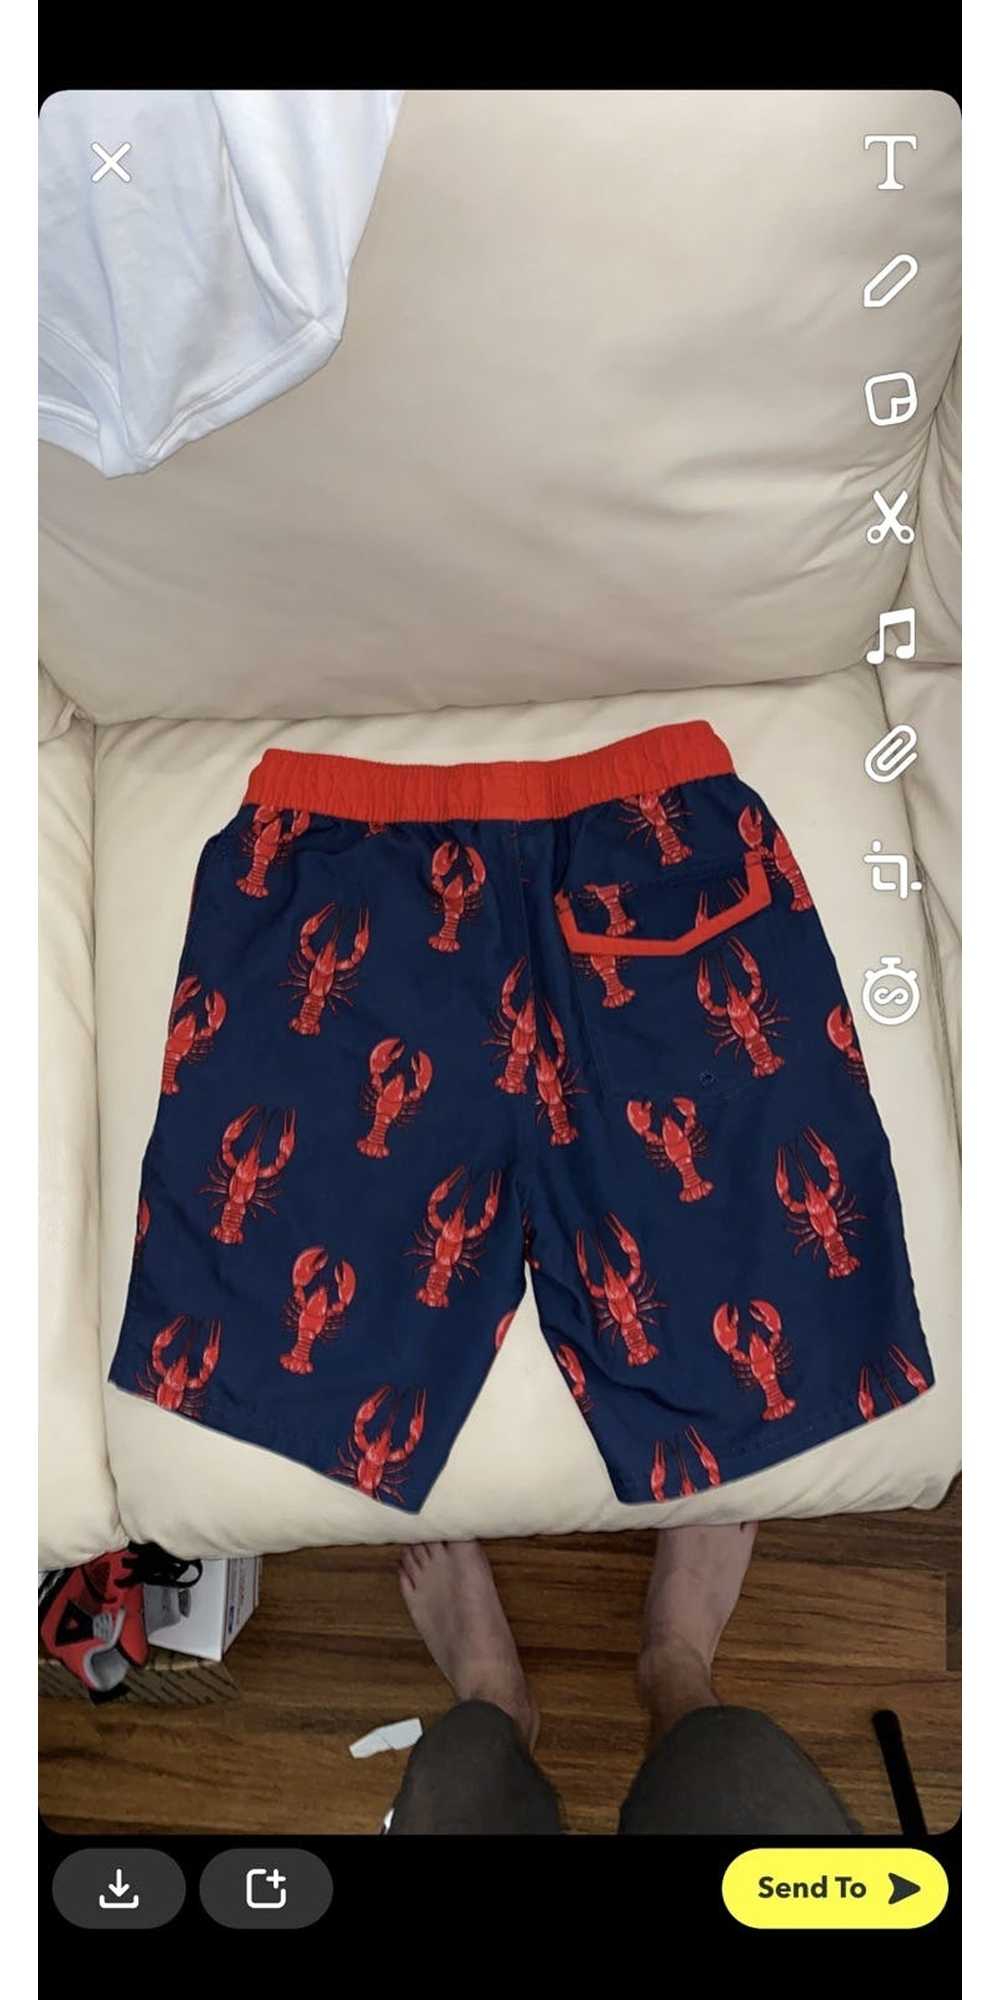 Nike Goodfellow Co. Lobster Board Shorts - image 5